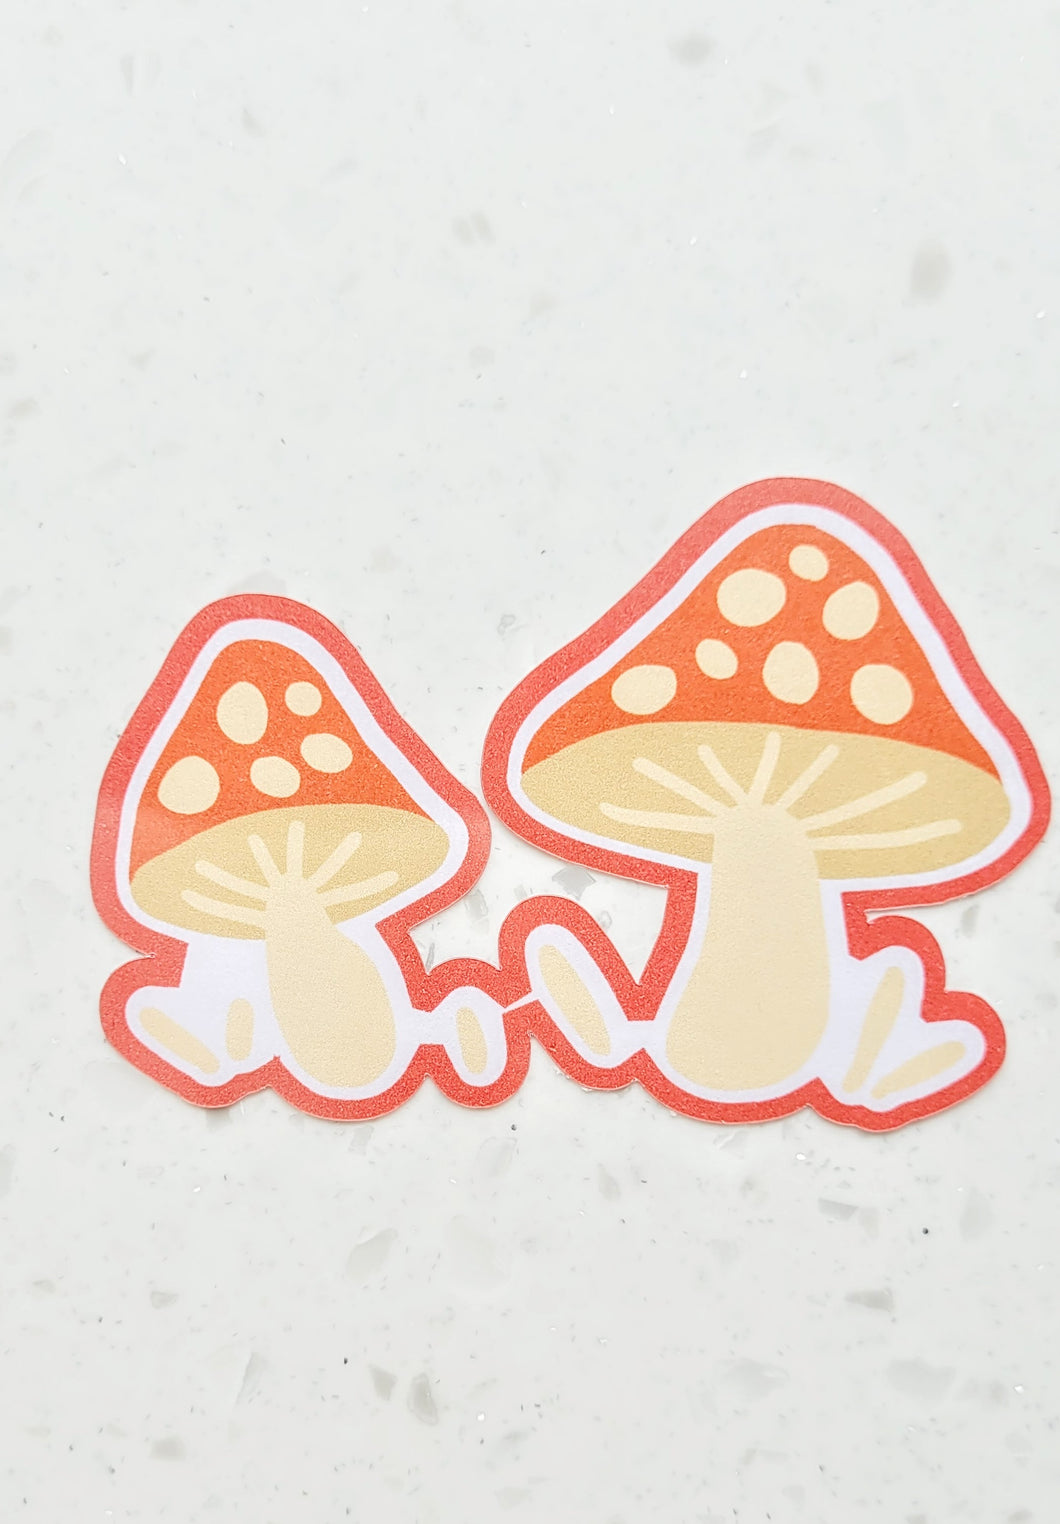 Bunch of Mushrooms